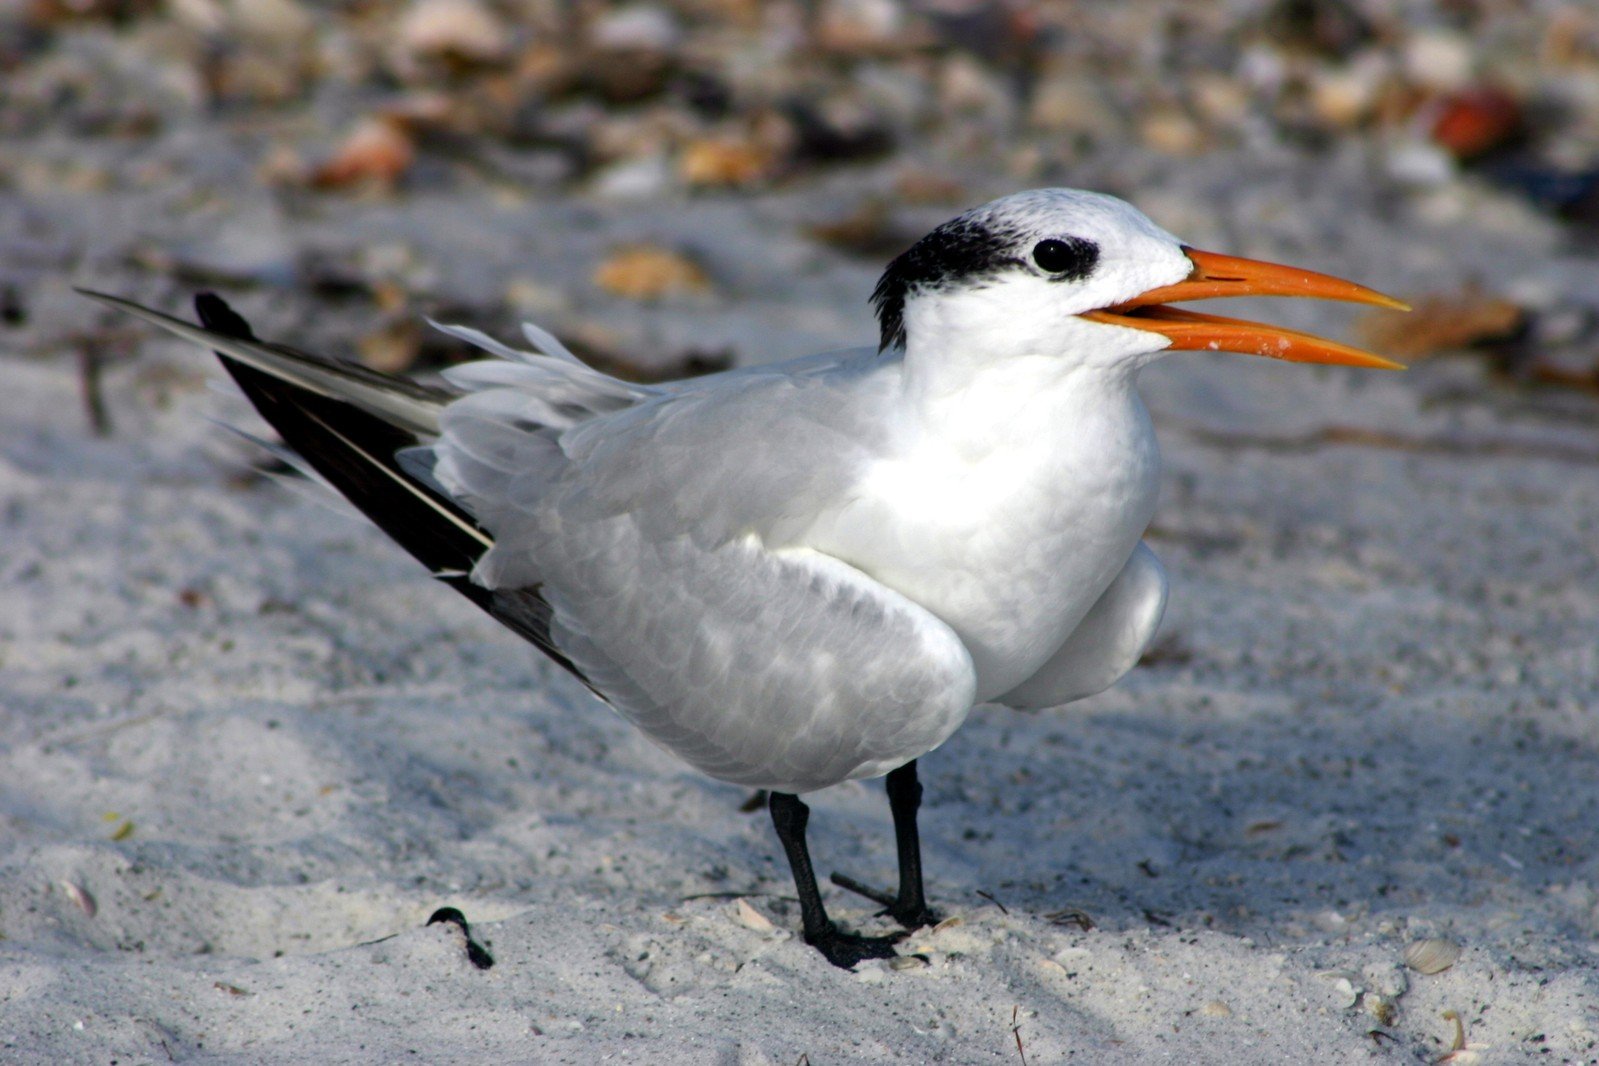 a black and white bird with a orange beak